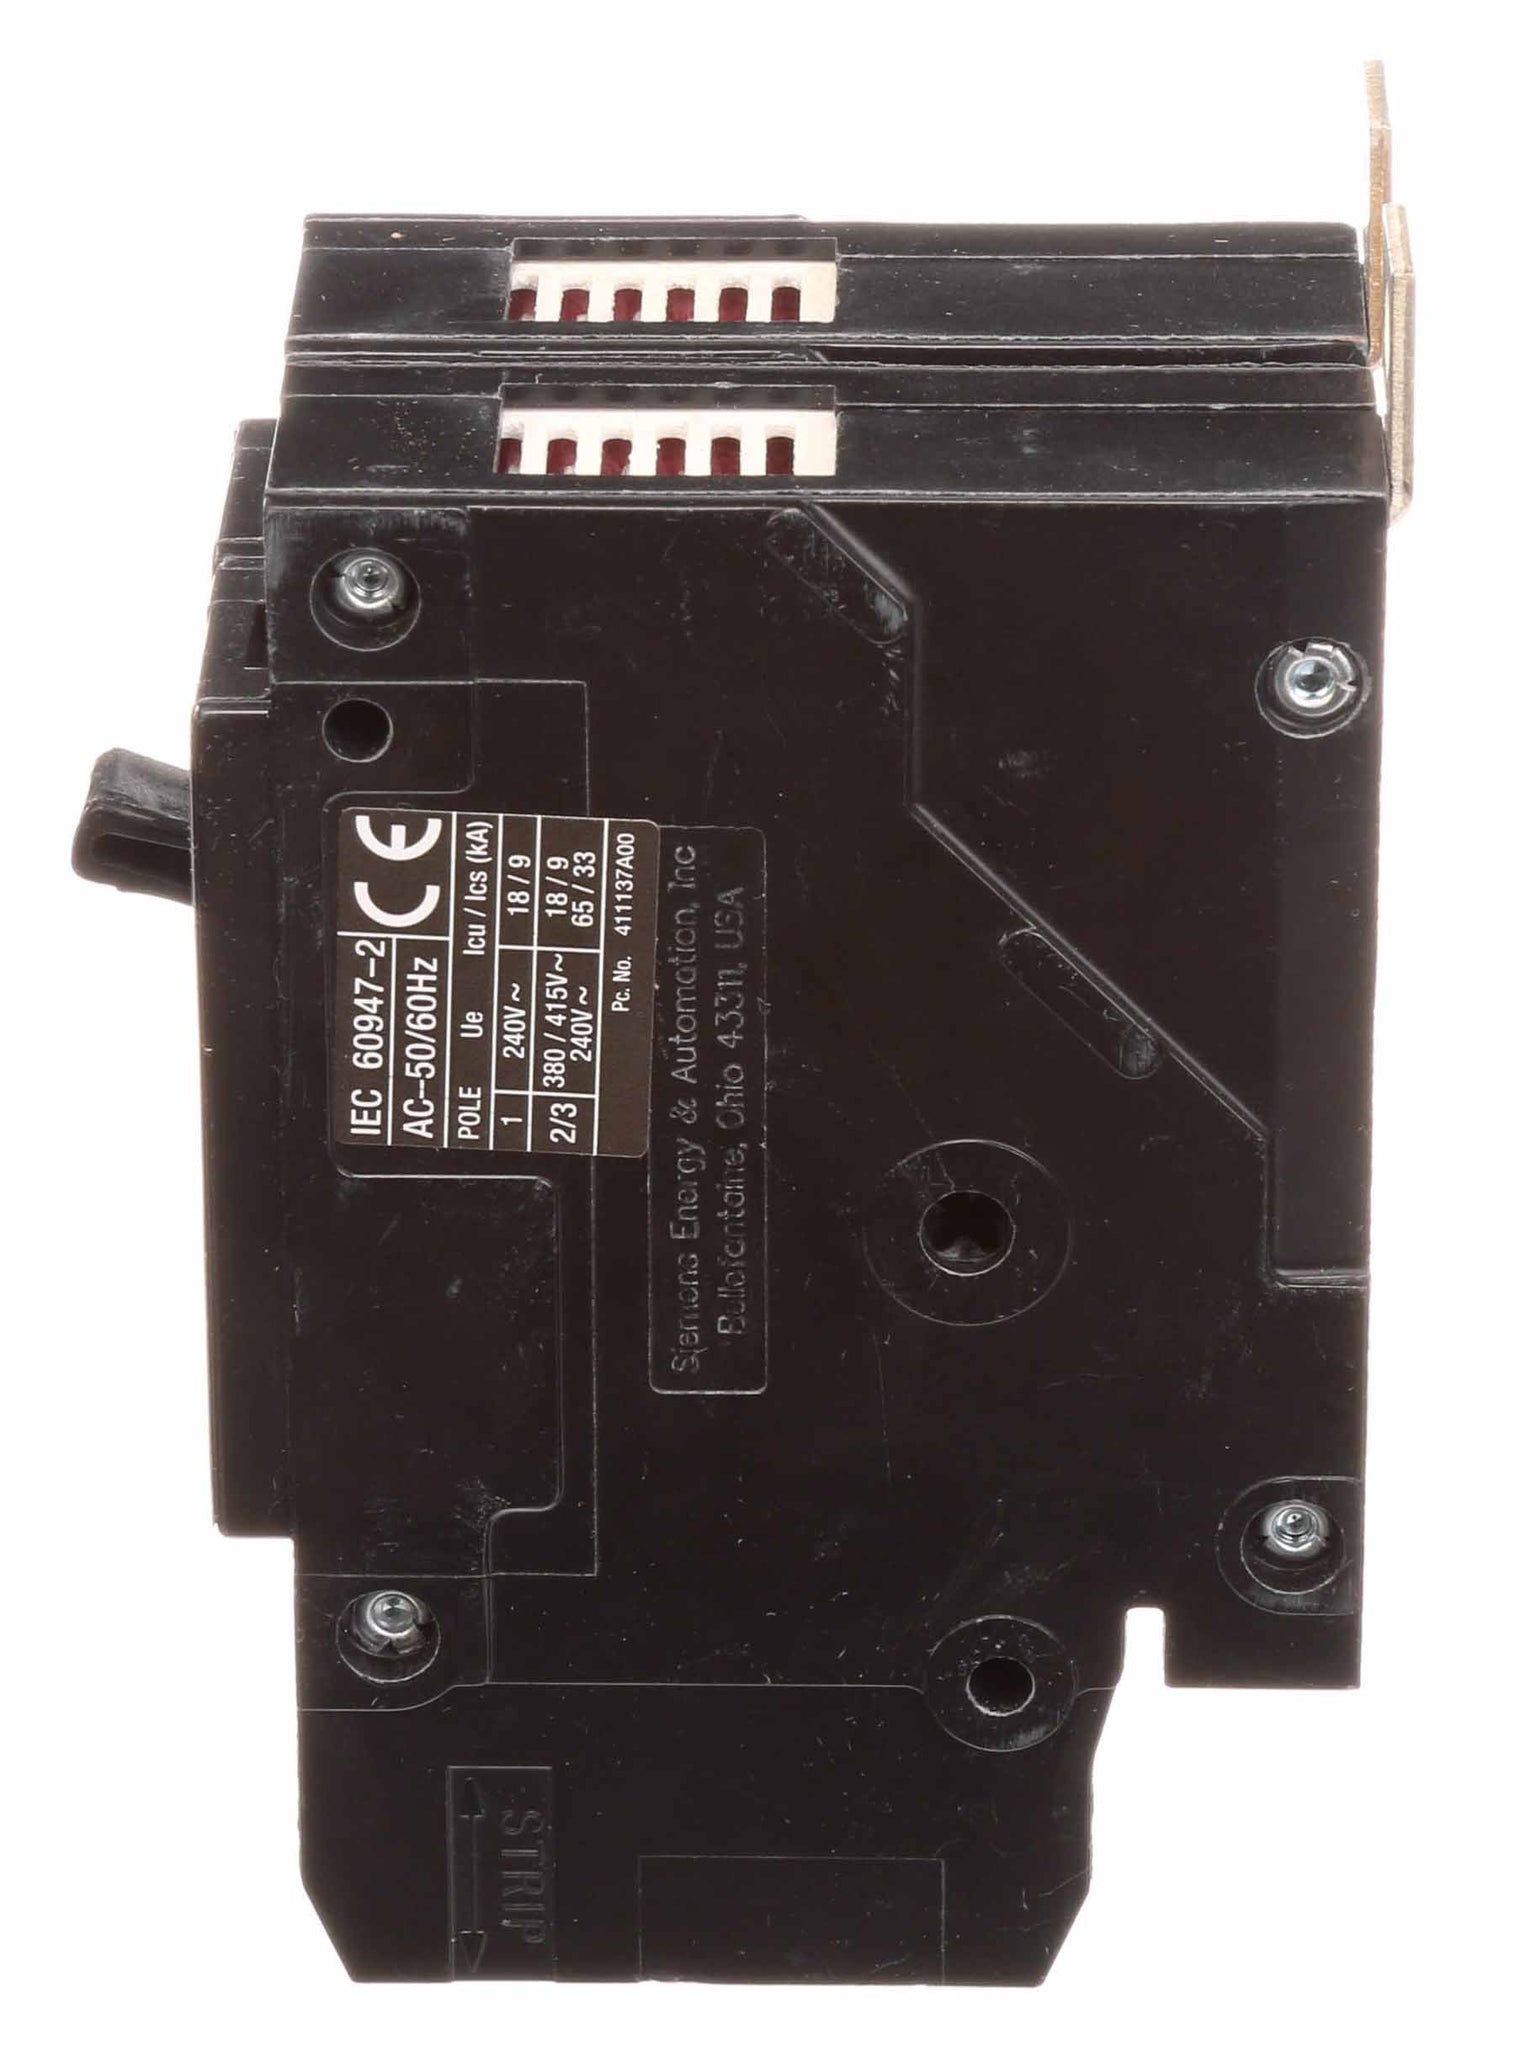 BQD6270 - Siemens - 70 Amp Molded Case Circuit Breaker